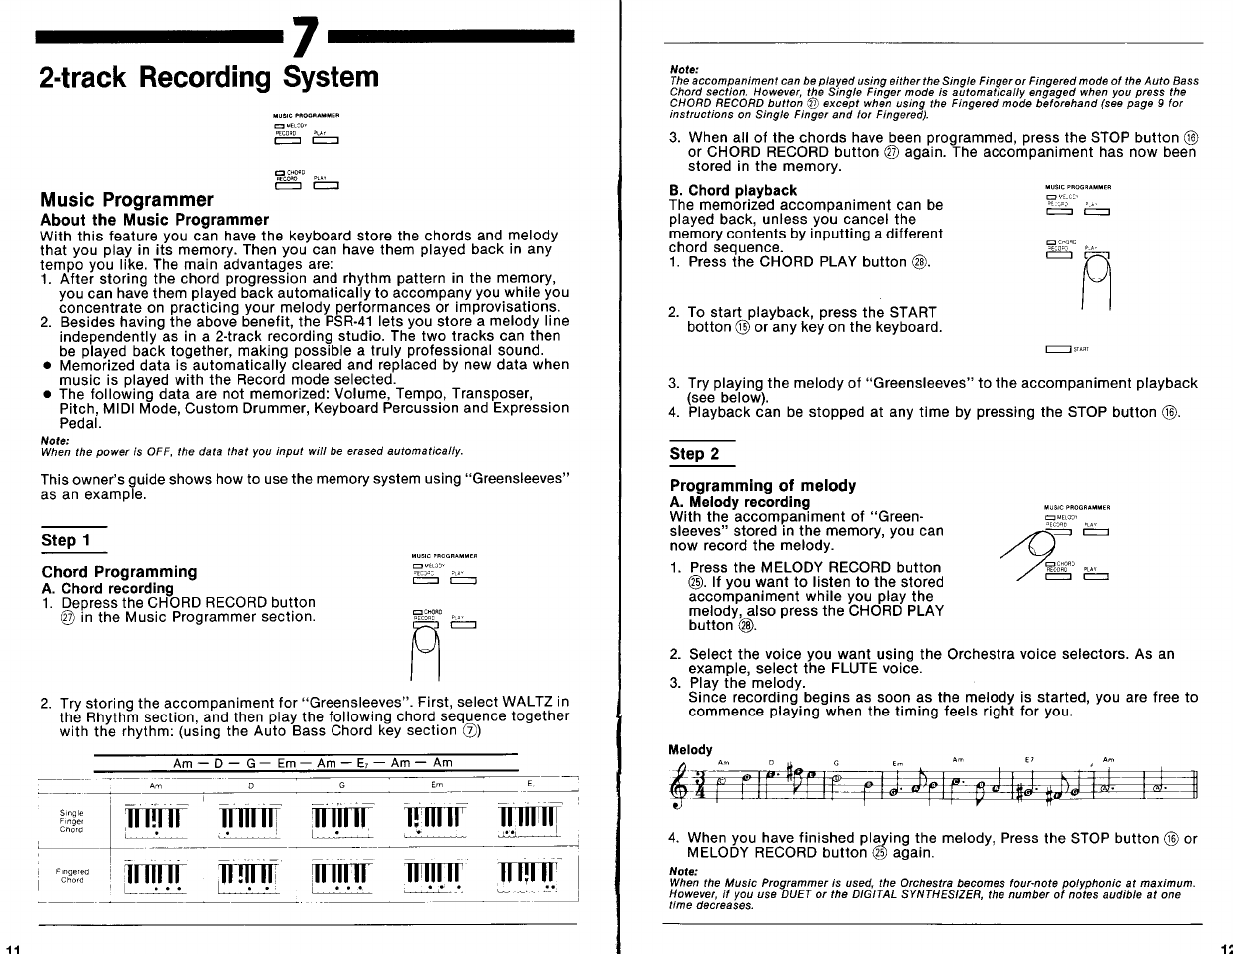 Track recording system, Step 1, Step 2 | Yamaha PSR-41 User Manual